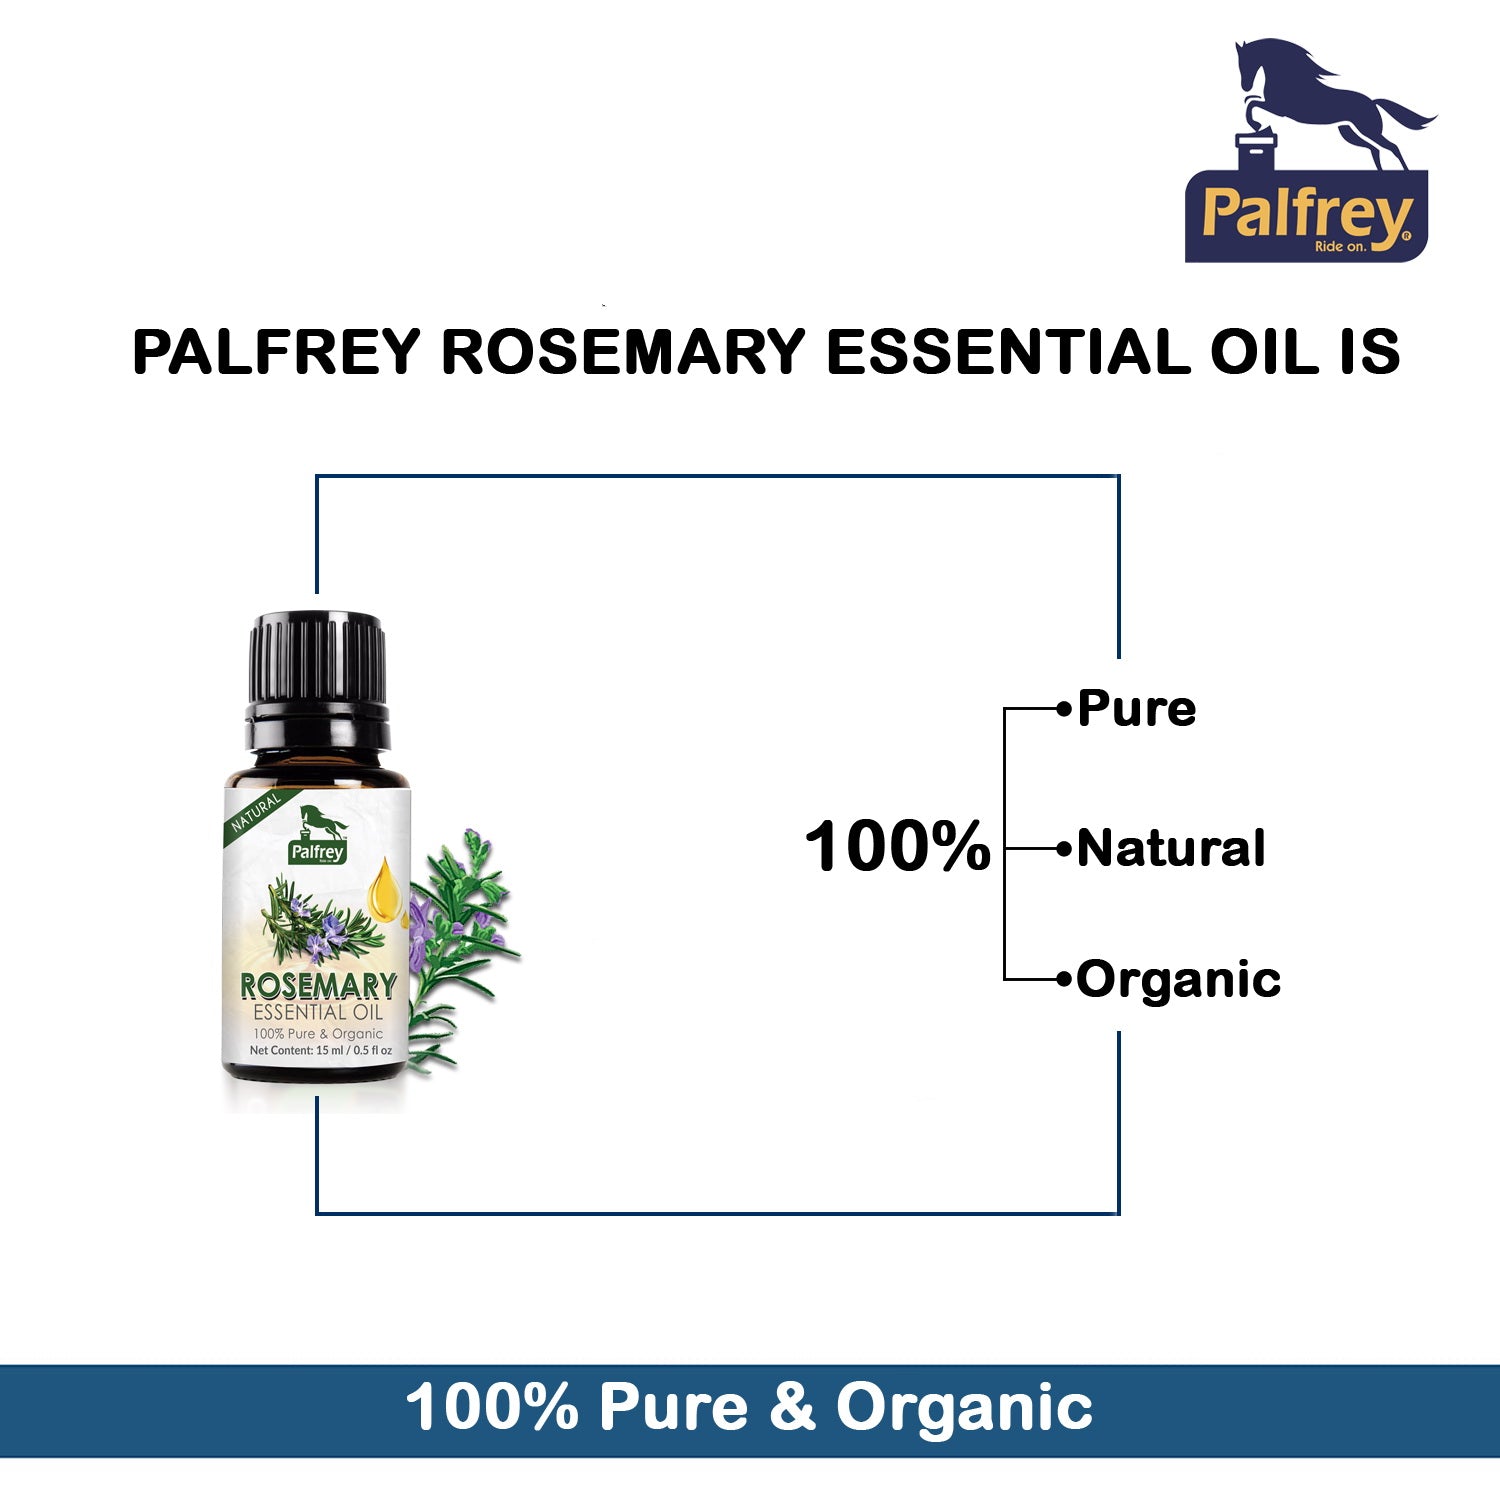 Palfrey Rosemary Essential Oils 15ml